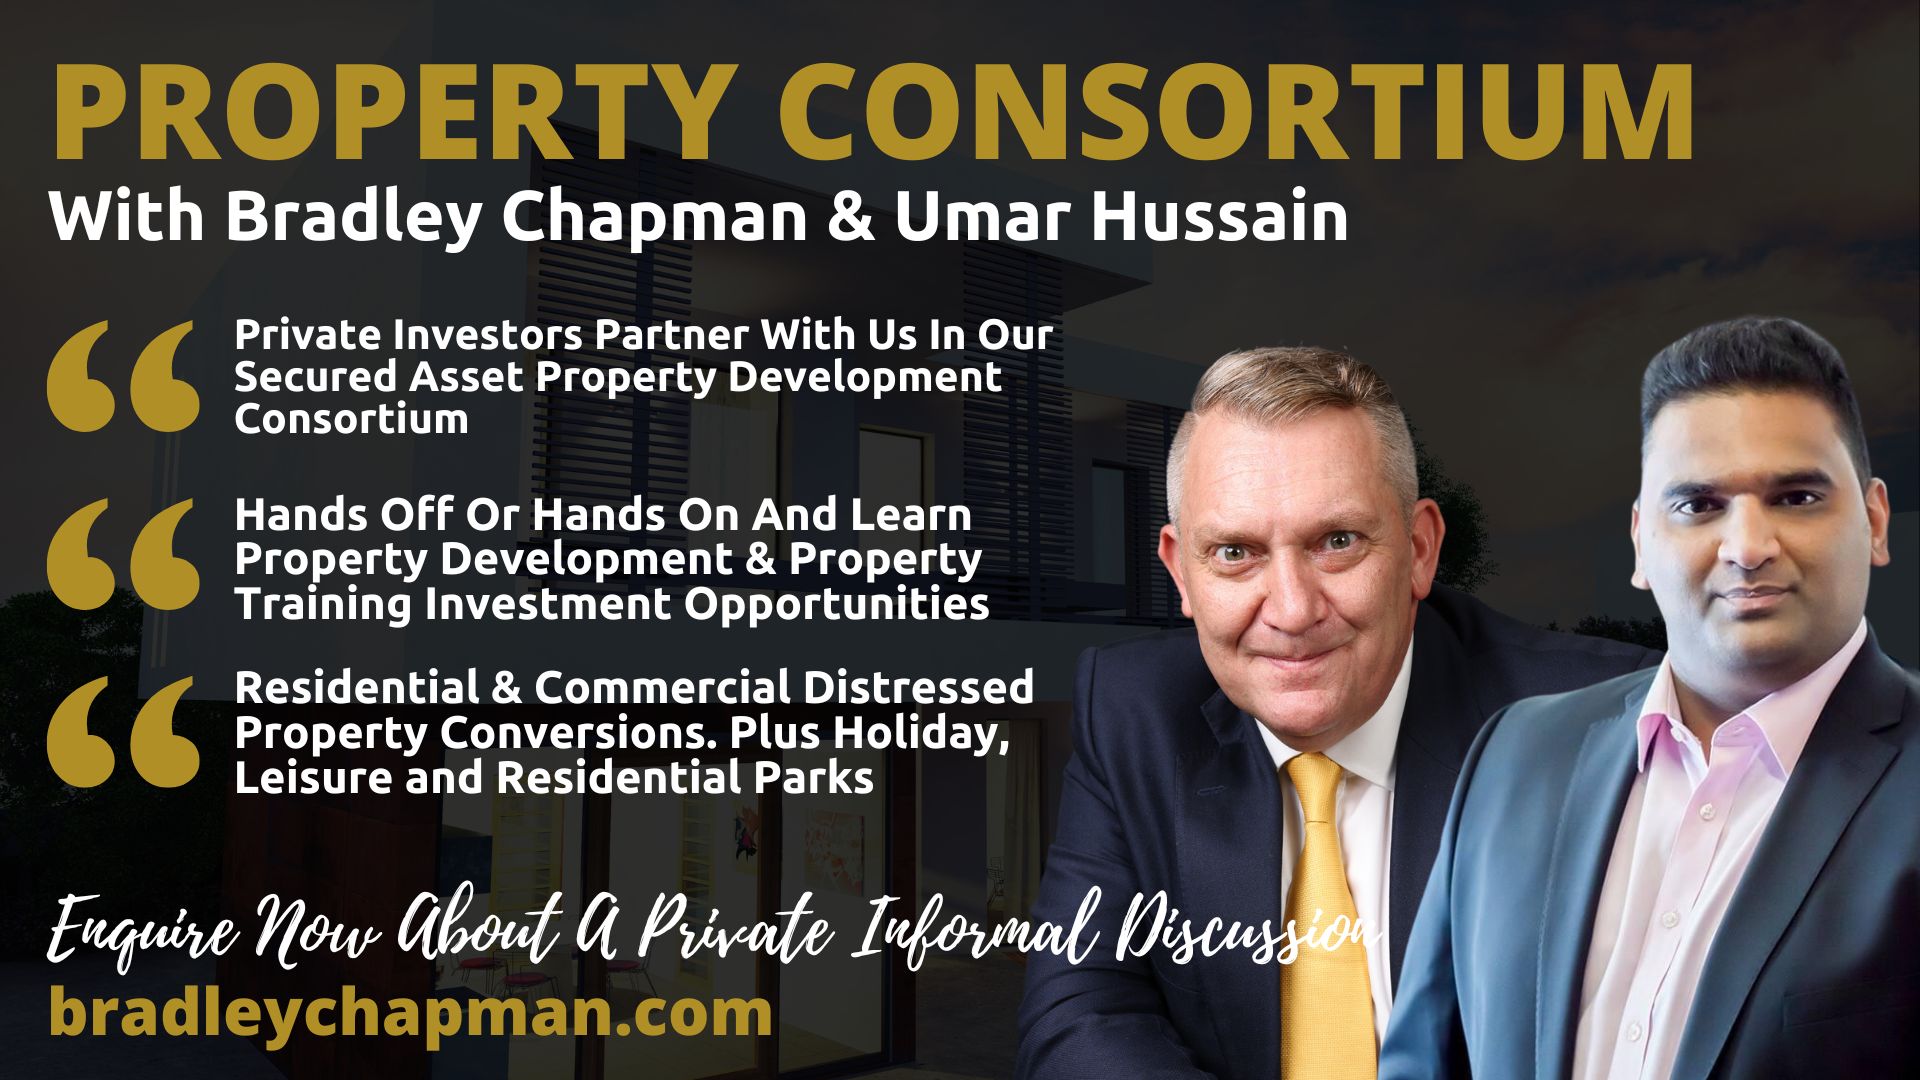 Bradley chapman and Umar Hussain Property Consortium